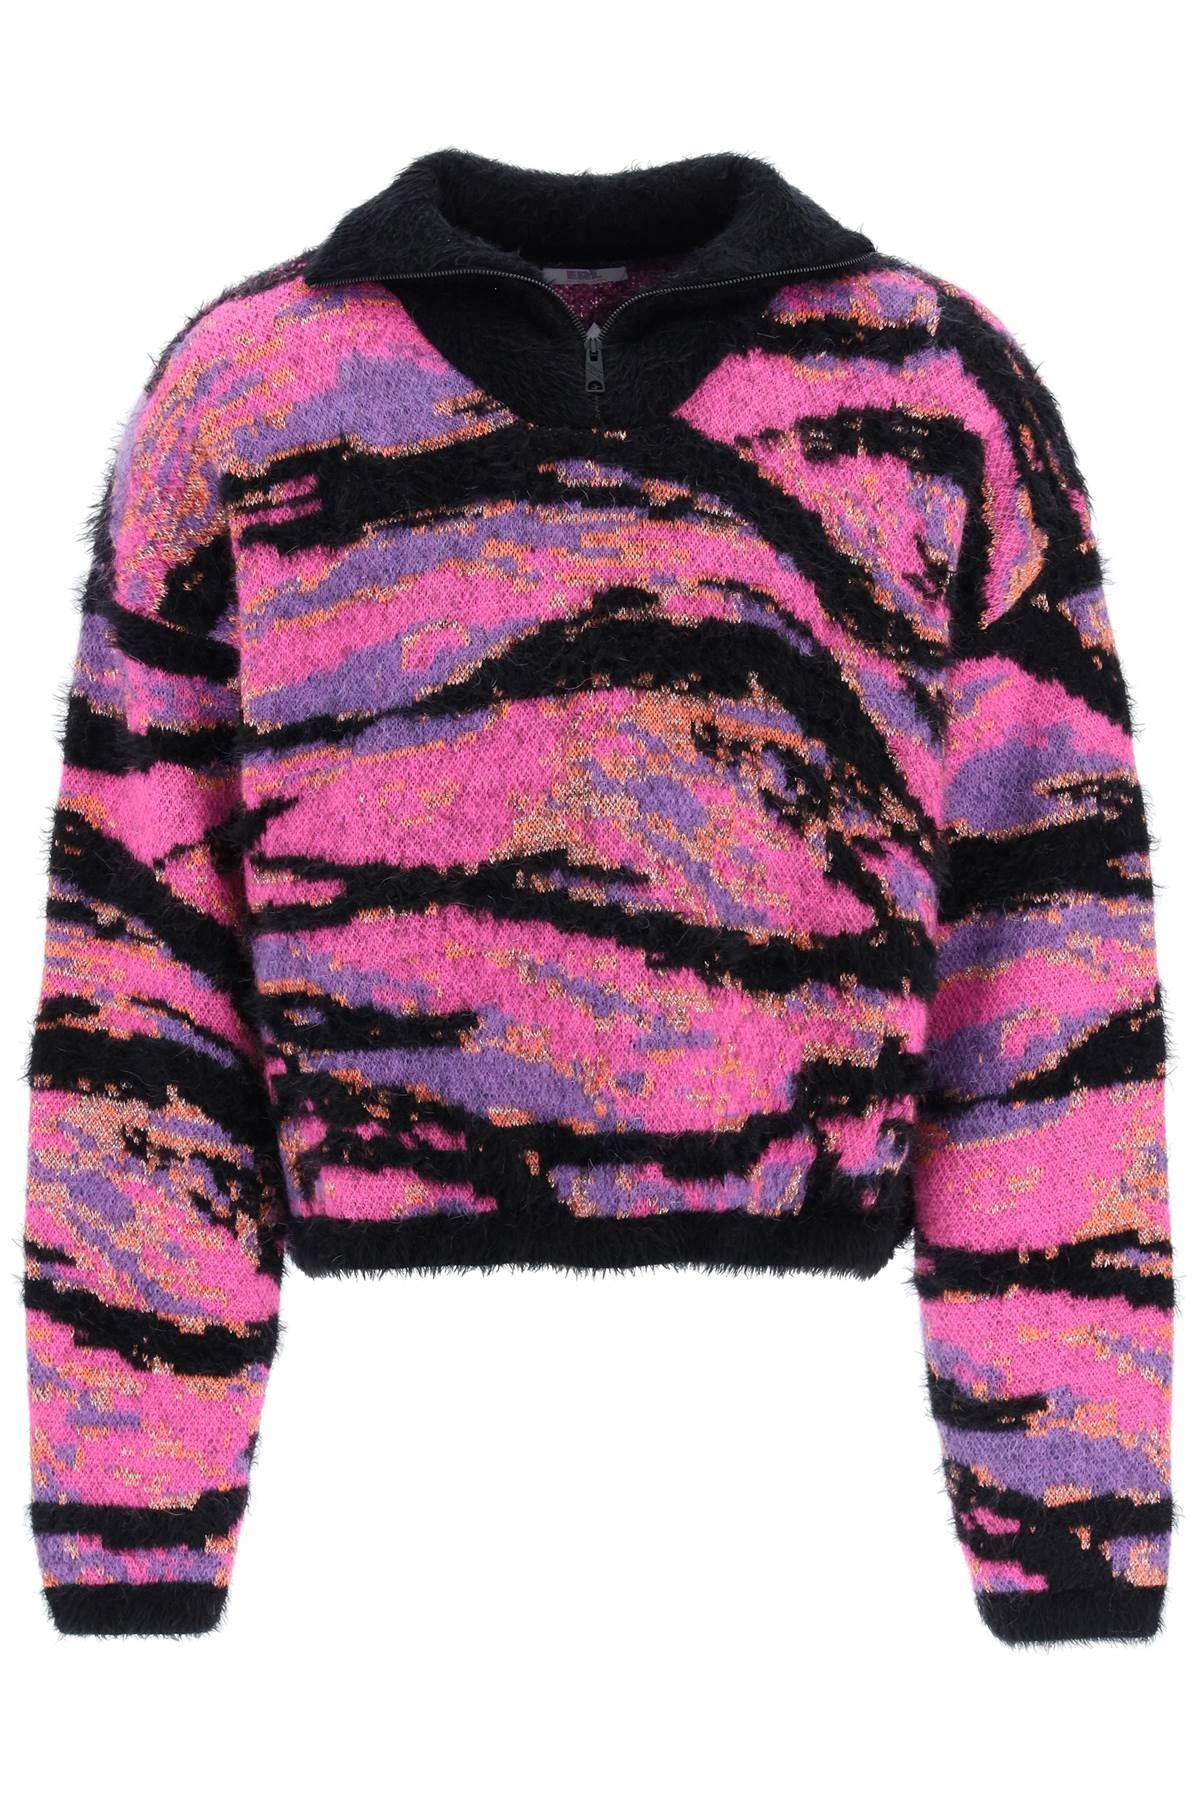 Erl Jacquard Turtleneck Sweater - 1